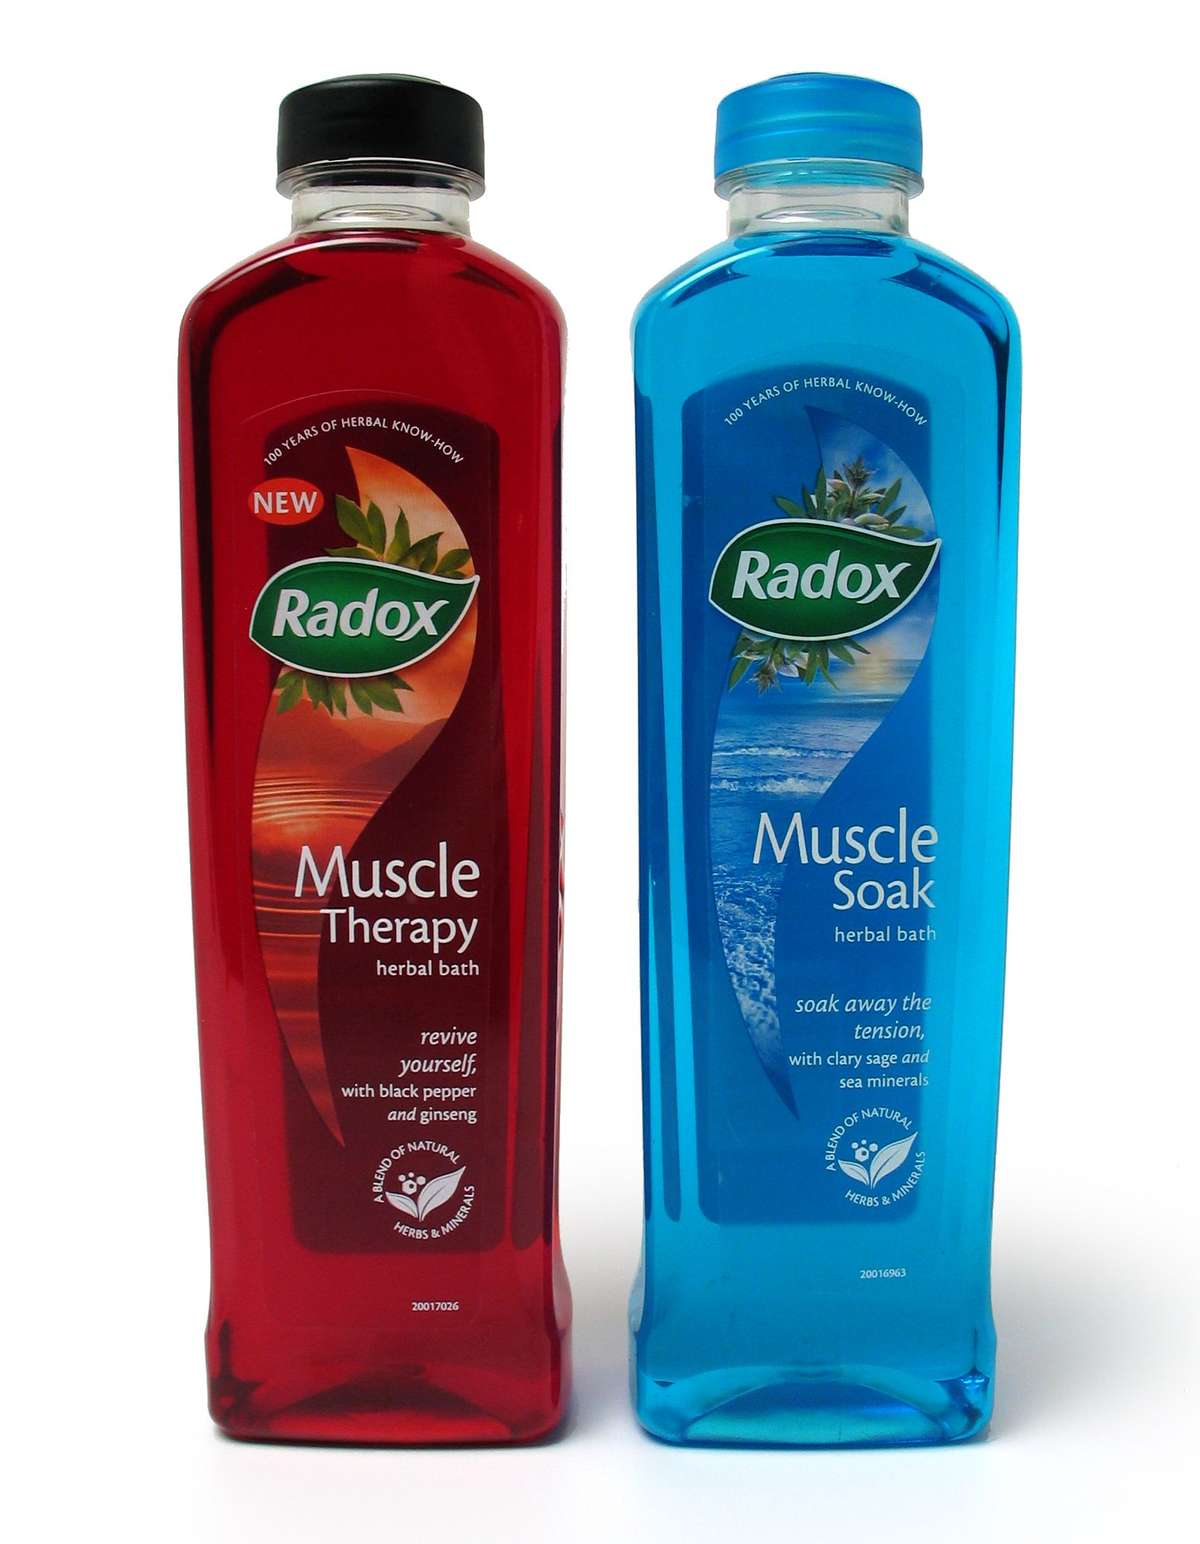 Red and blue Radox shower gel bottles